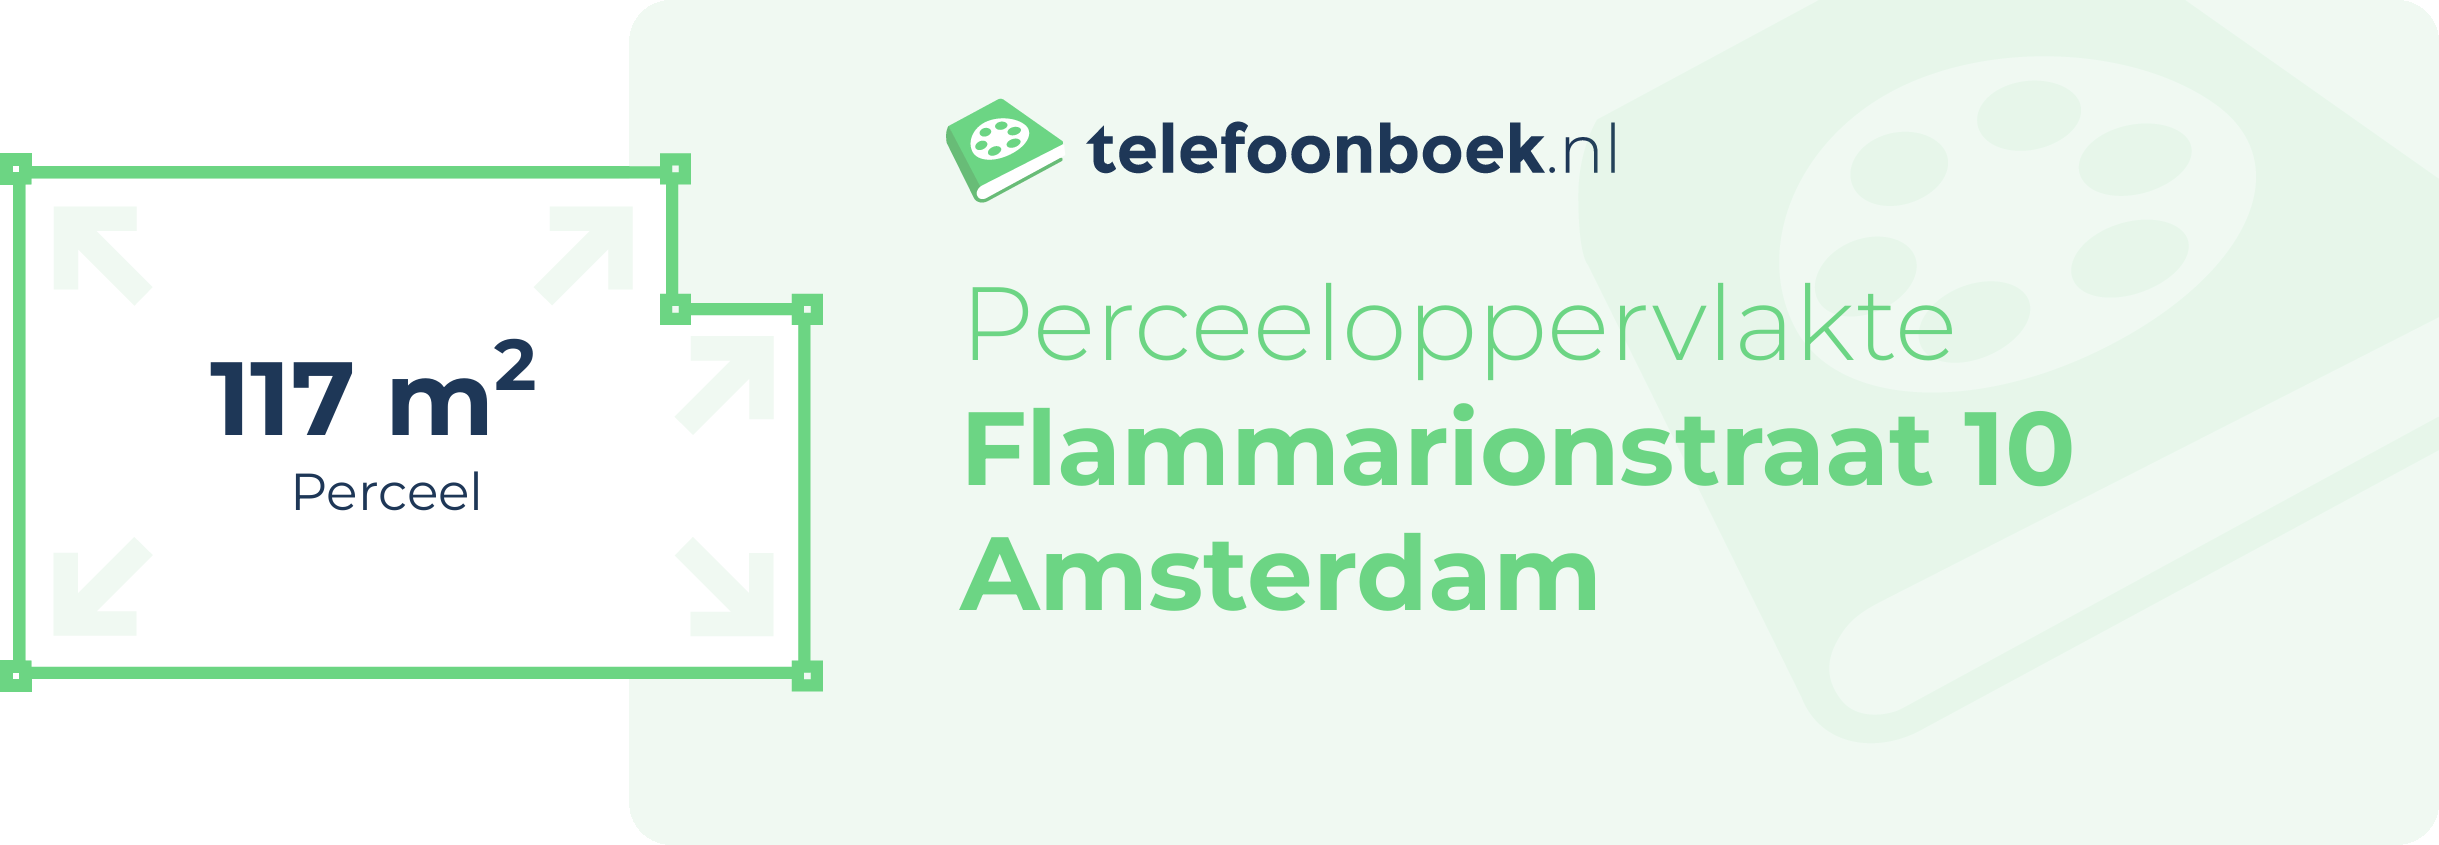 Perceeloppervlakte Flammarionstraat 10 Amsterdam